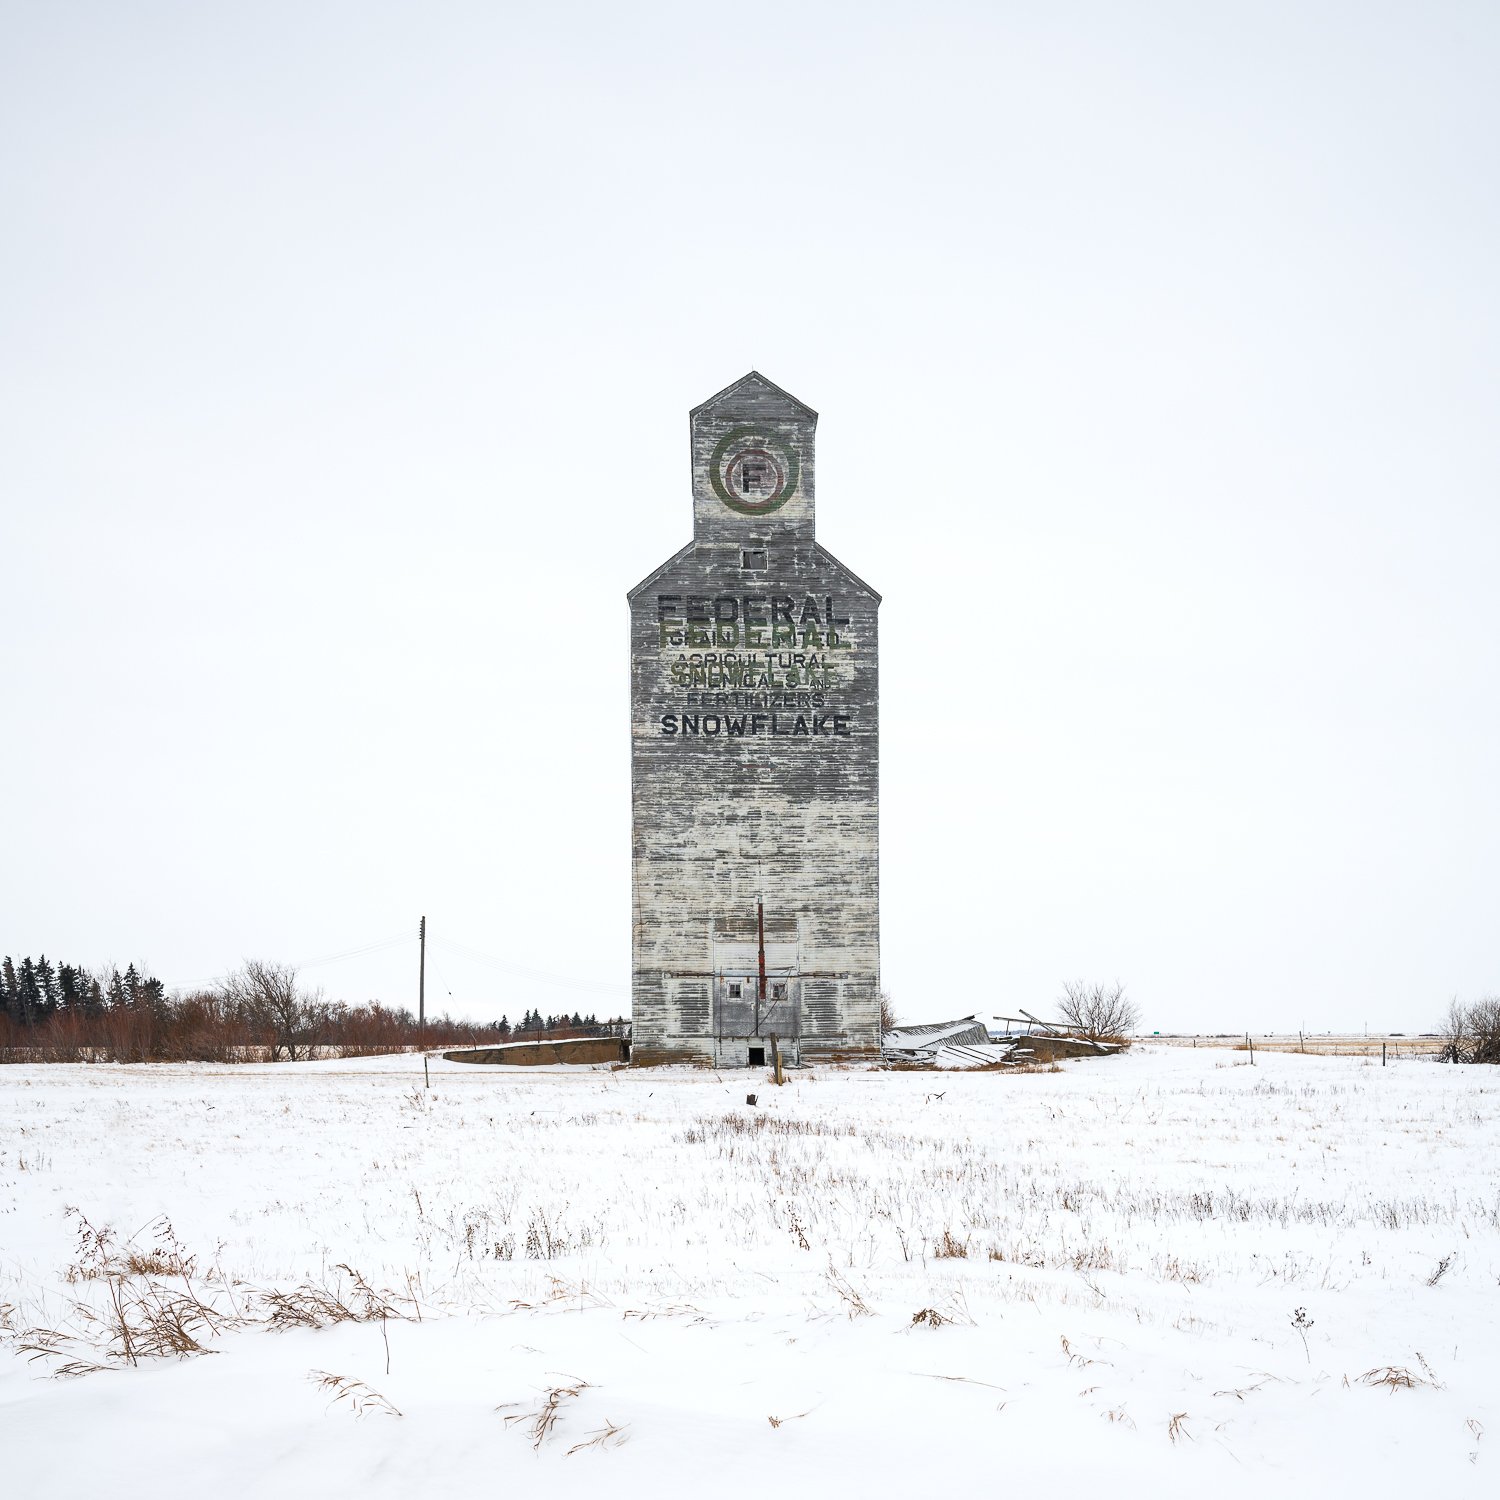 Prince Albert – Grain Elevators of Canada